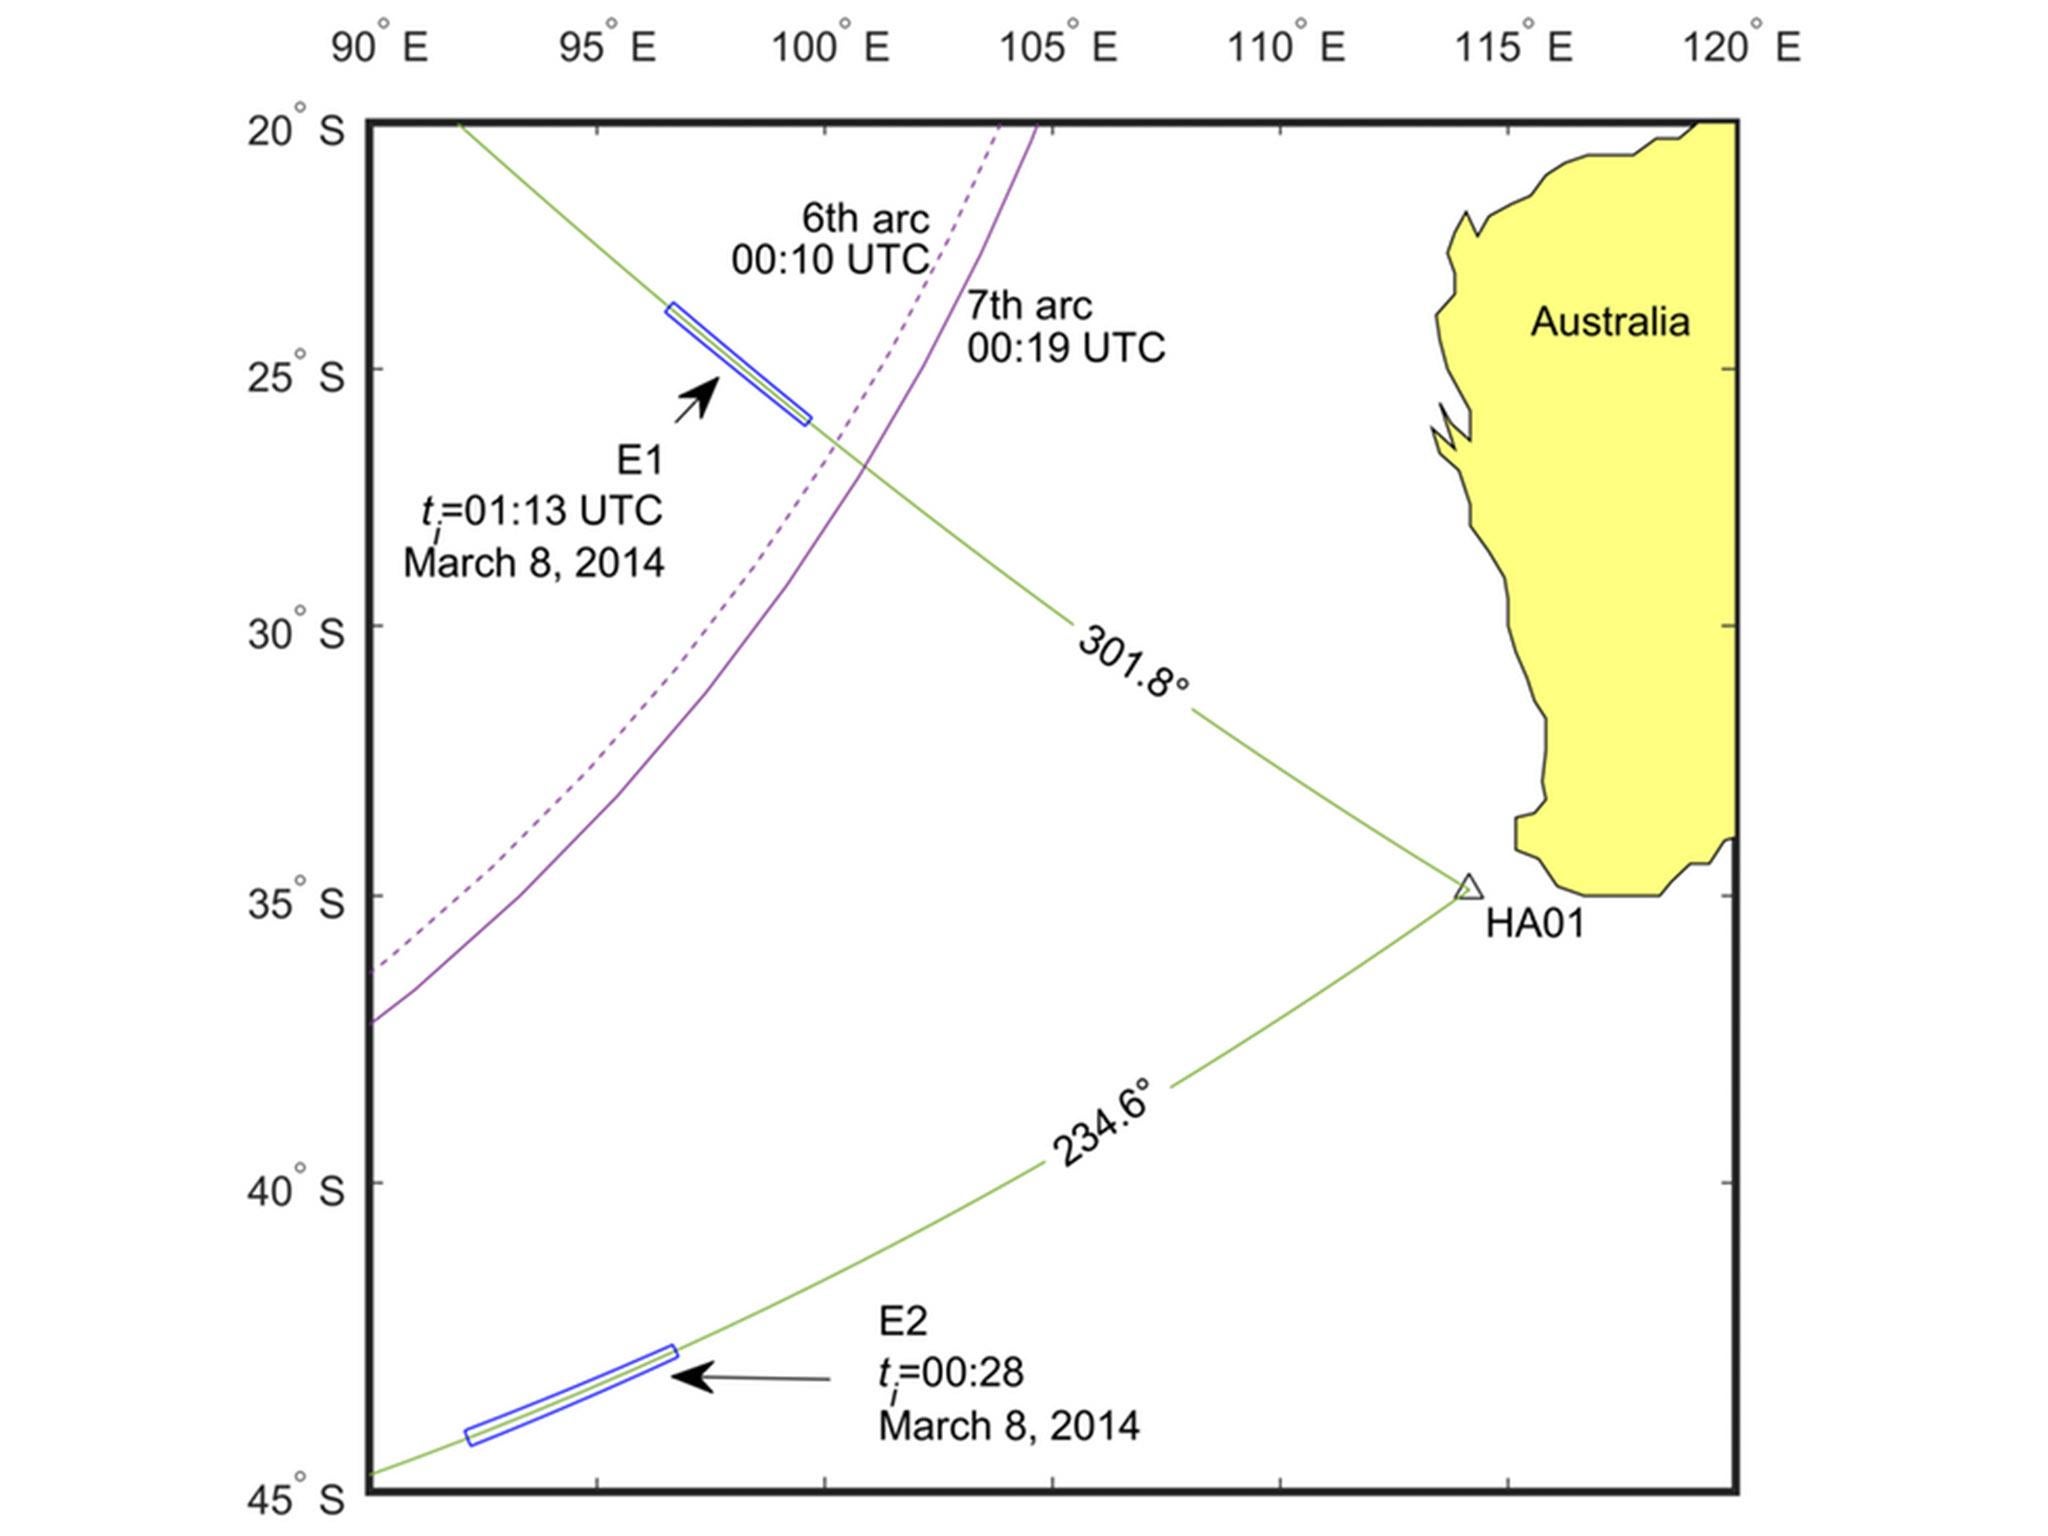 The two events (E1 and E2) captured on March 8 2014, between 00:00 UTC and 02:00 UTC (Davide Crivelli/Usama Kadri)